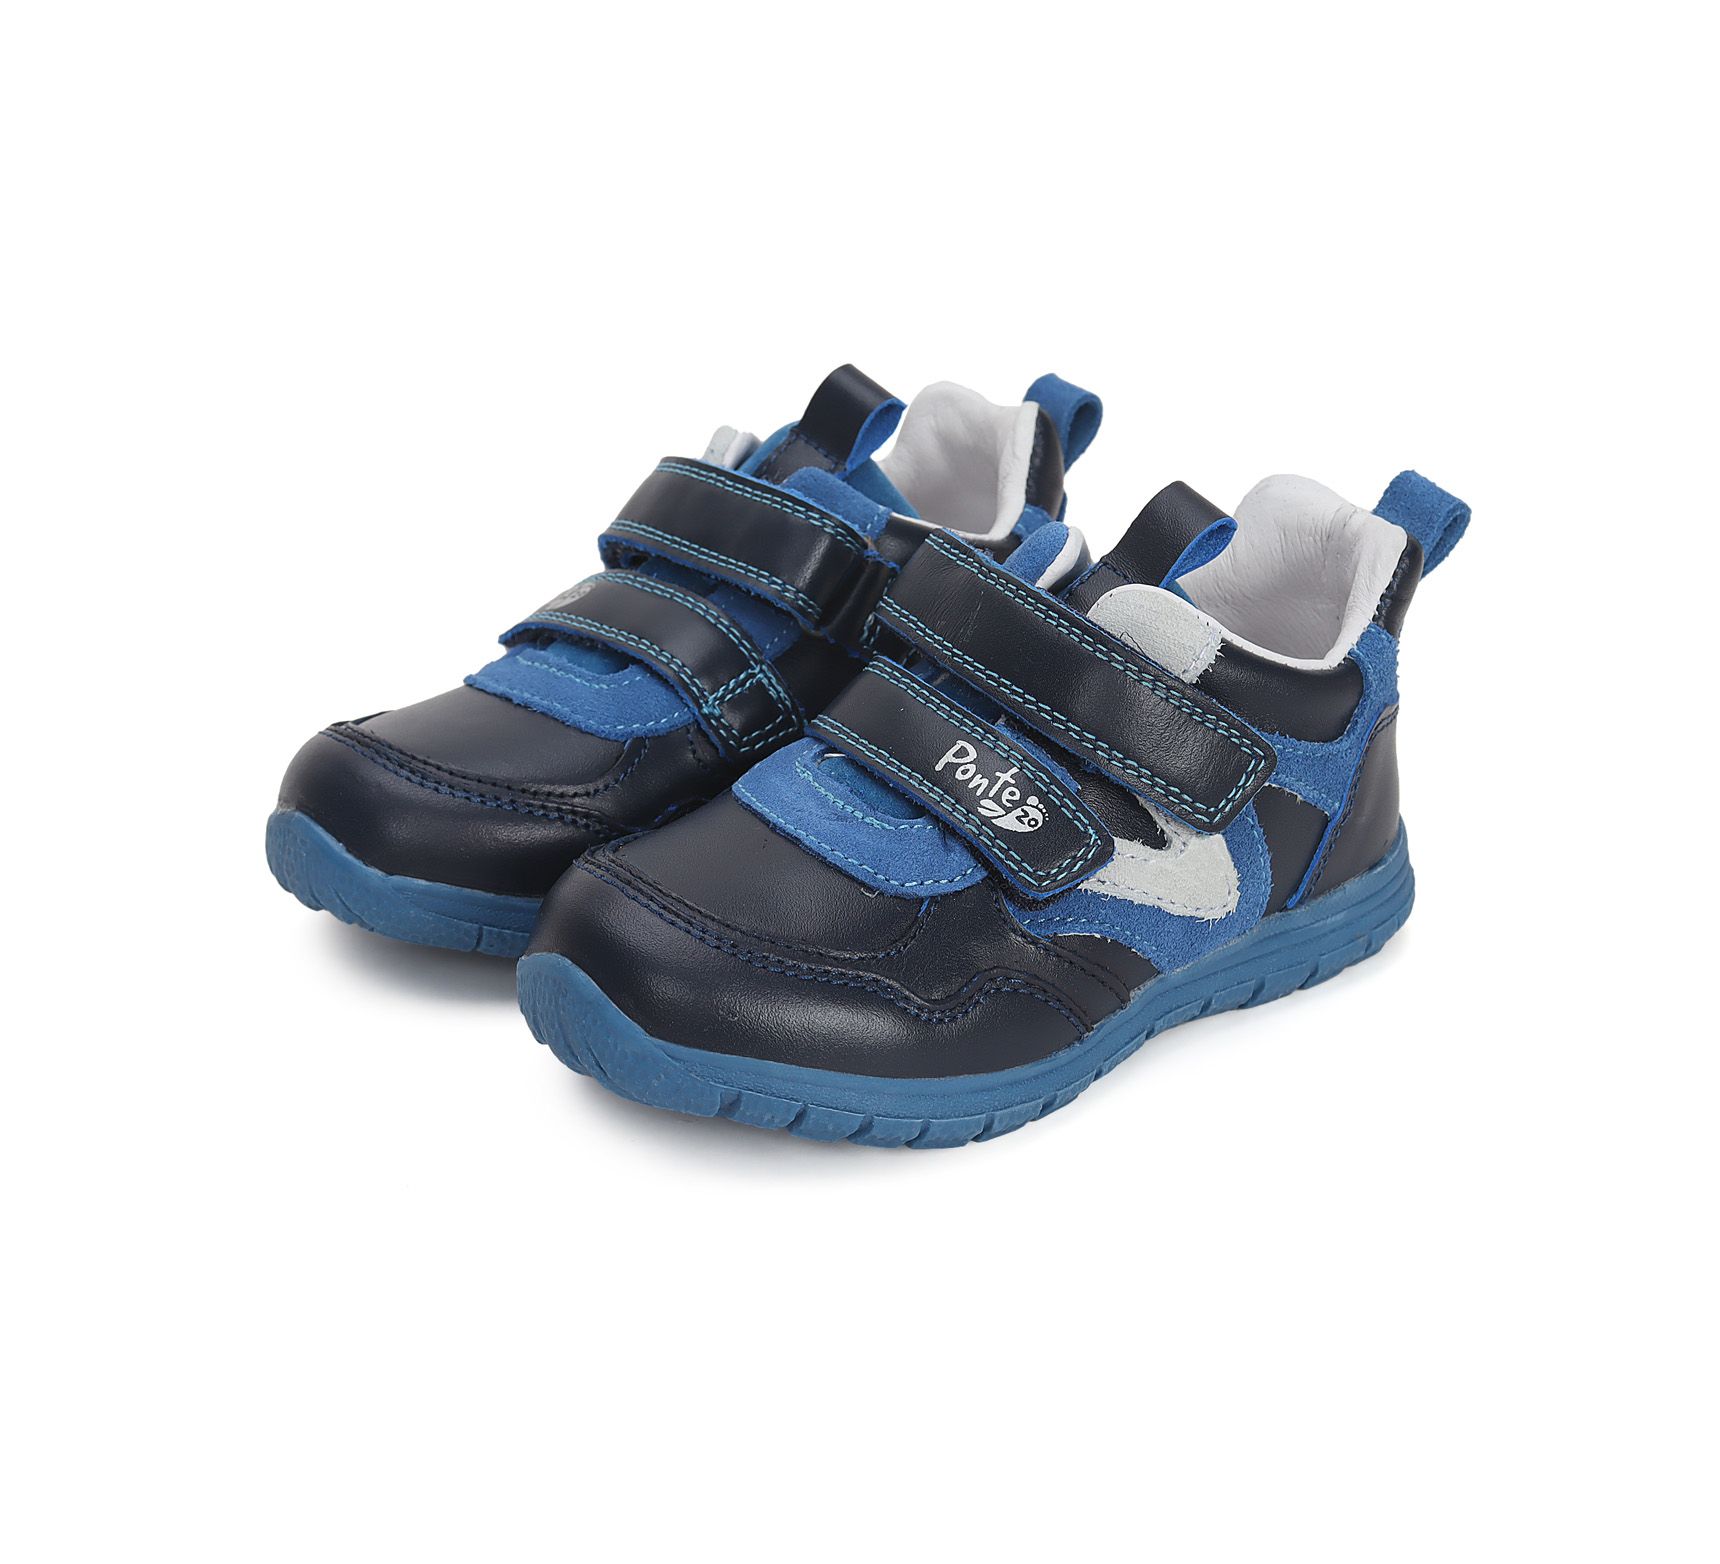 PONTE20 átmeneti bőr cipő DA03-4-1723AL ROYAL BLUE  28-33 méretben